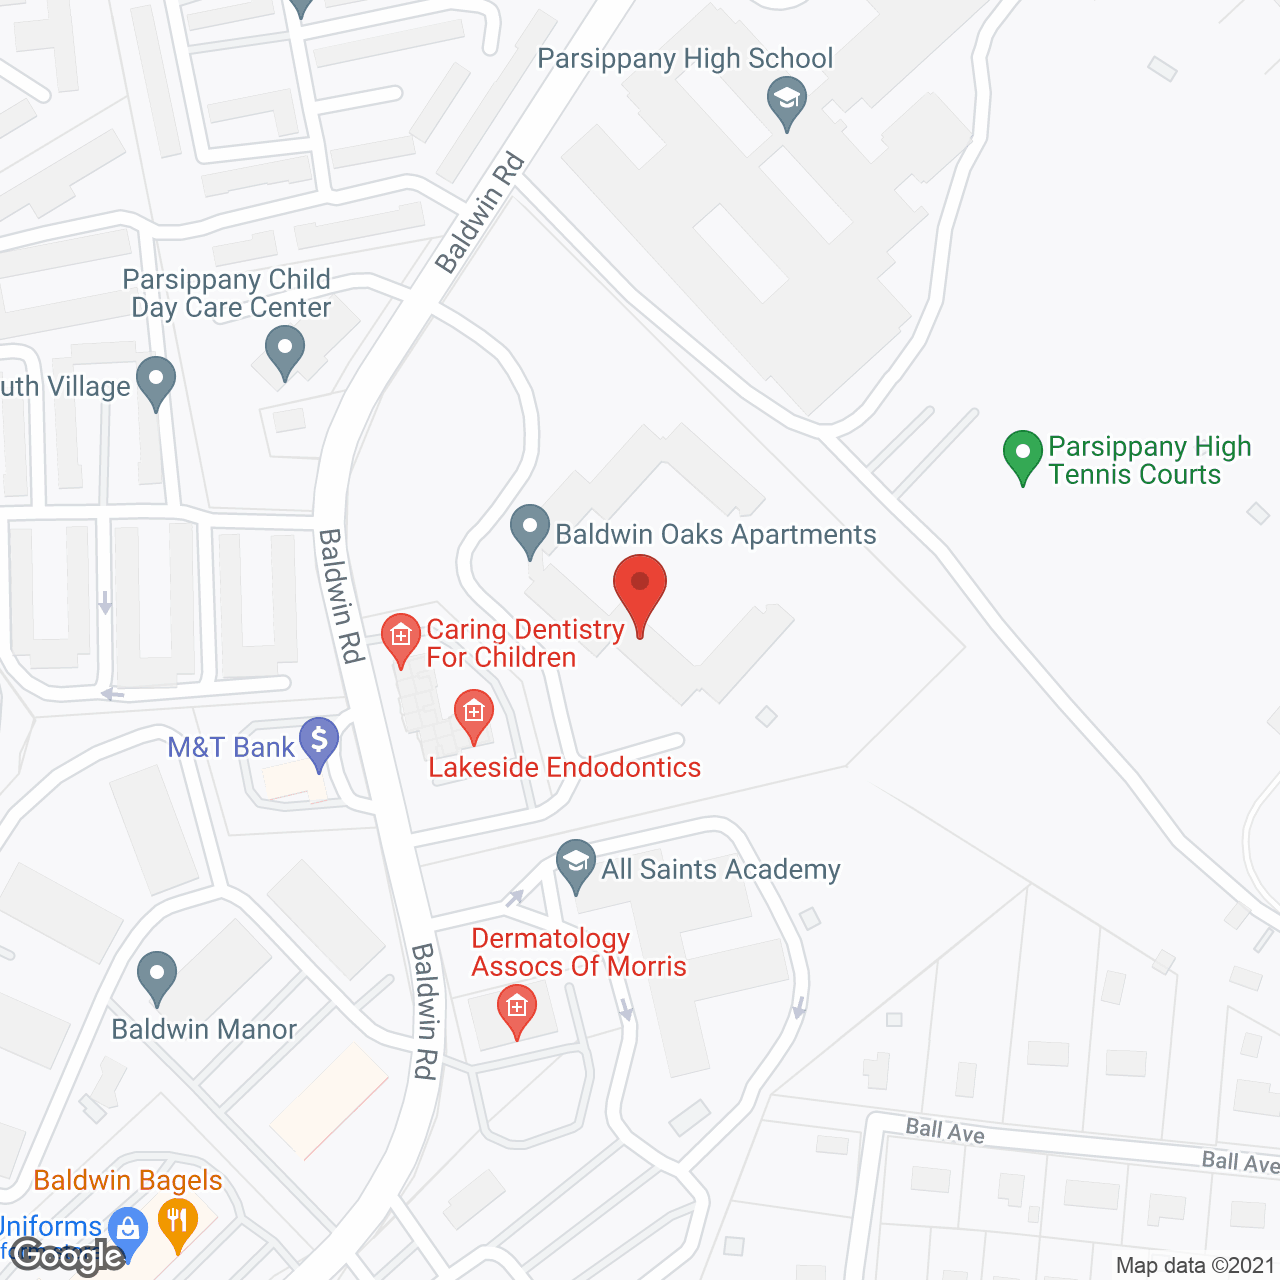 Baldwin Oaks Apartments in google map